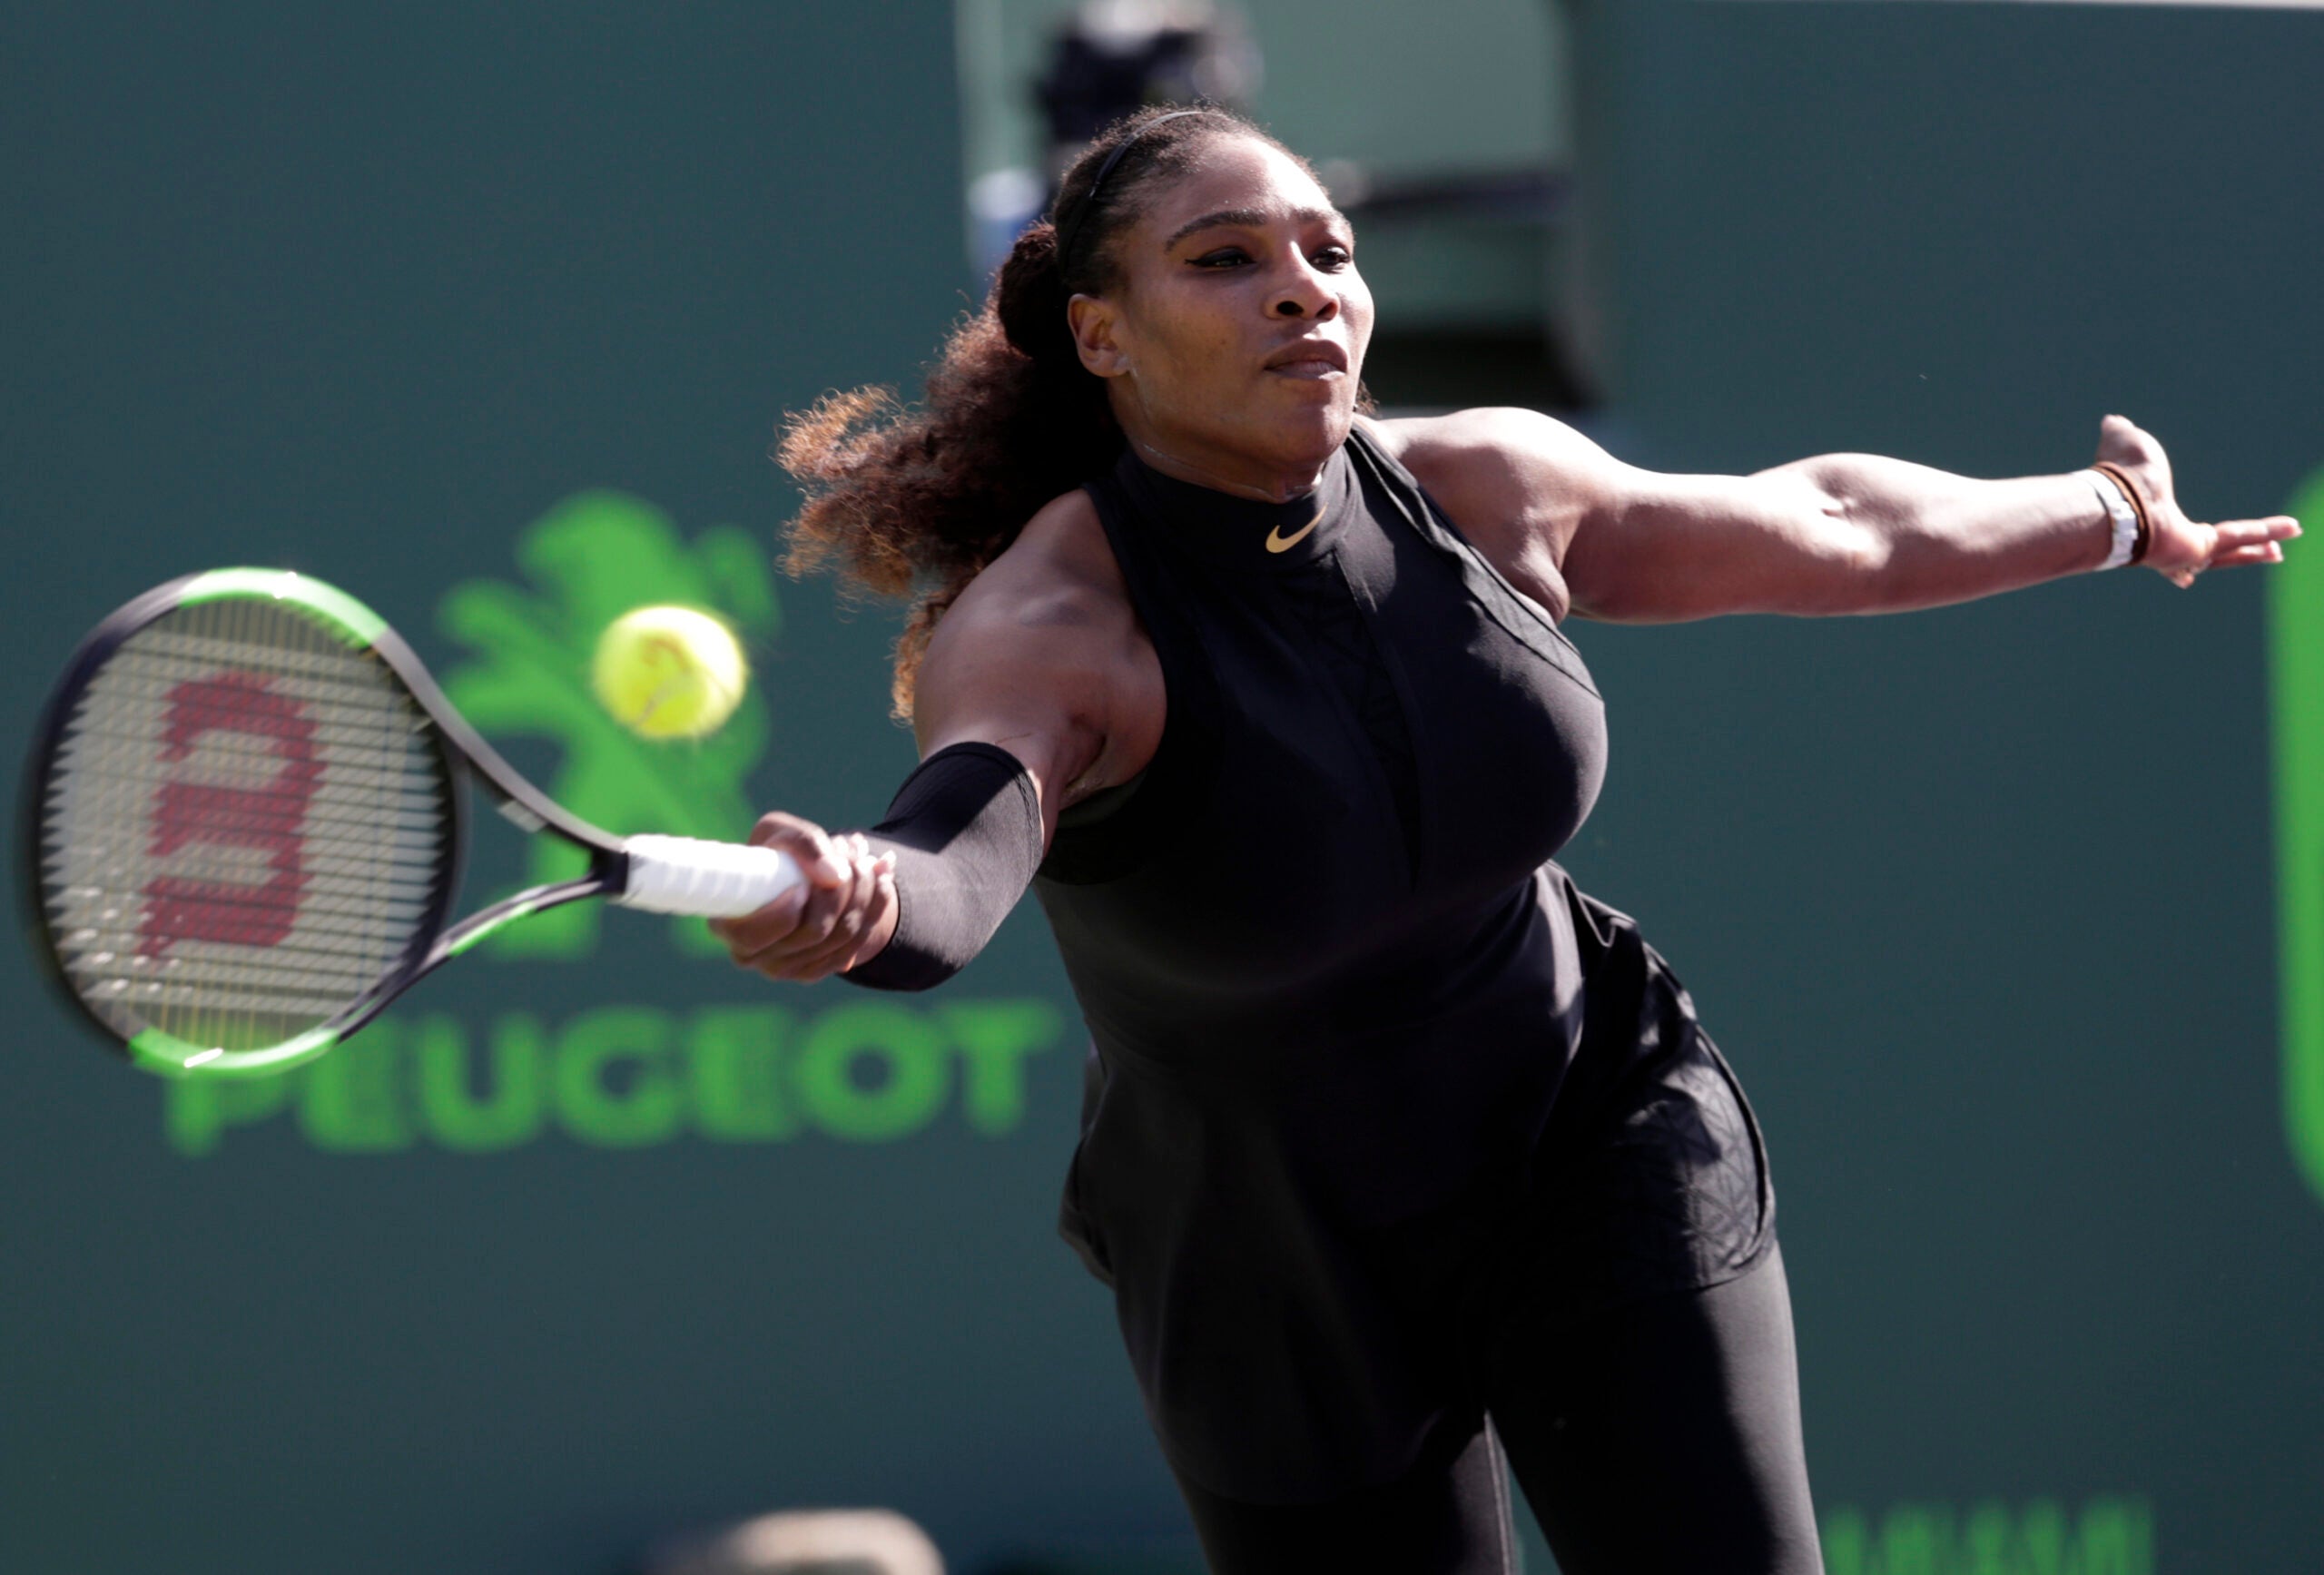 Serena Williams nears Italian Open win, Tennis